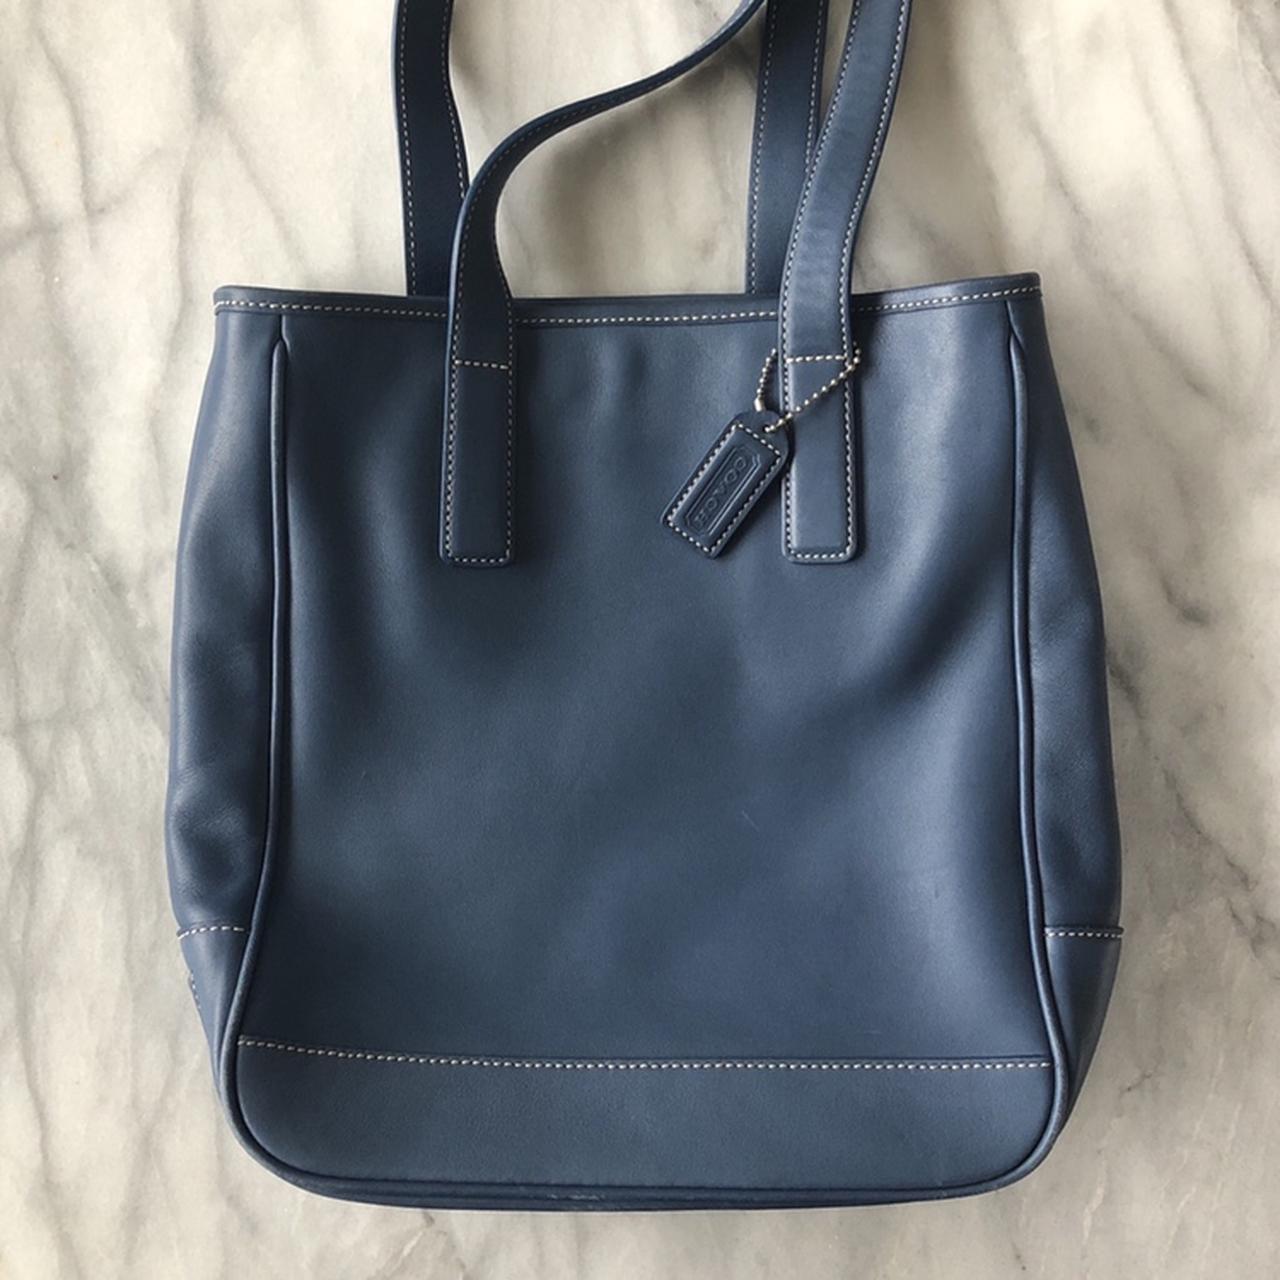 Vintage Coach bag. Blue leather exterior with white - Depop